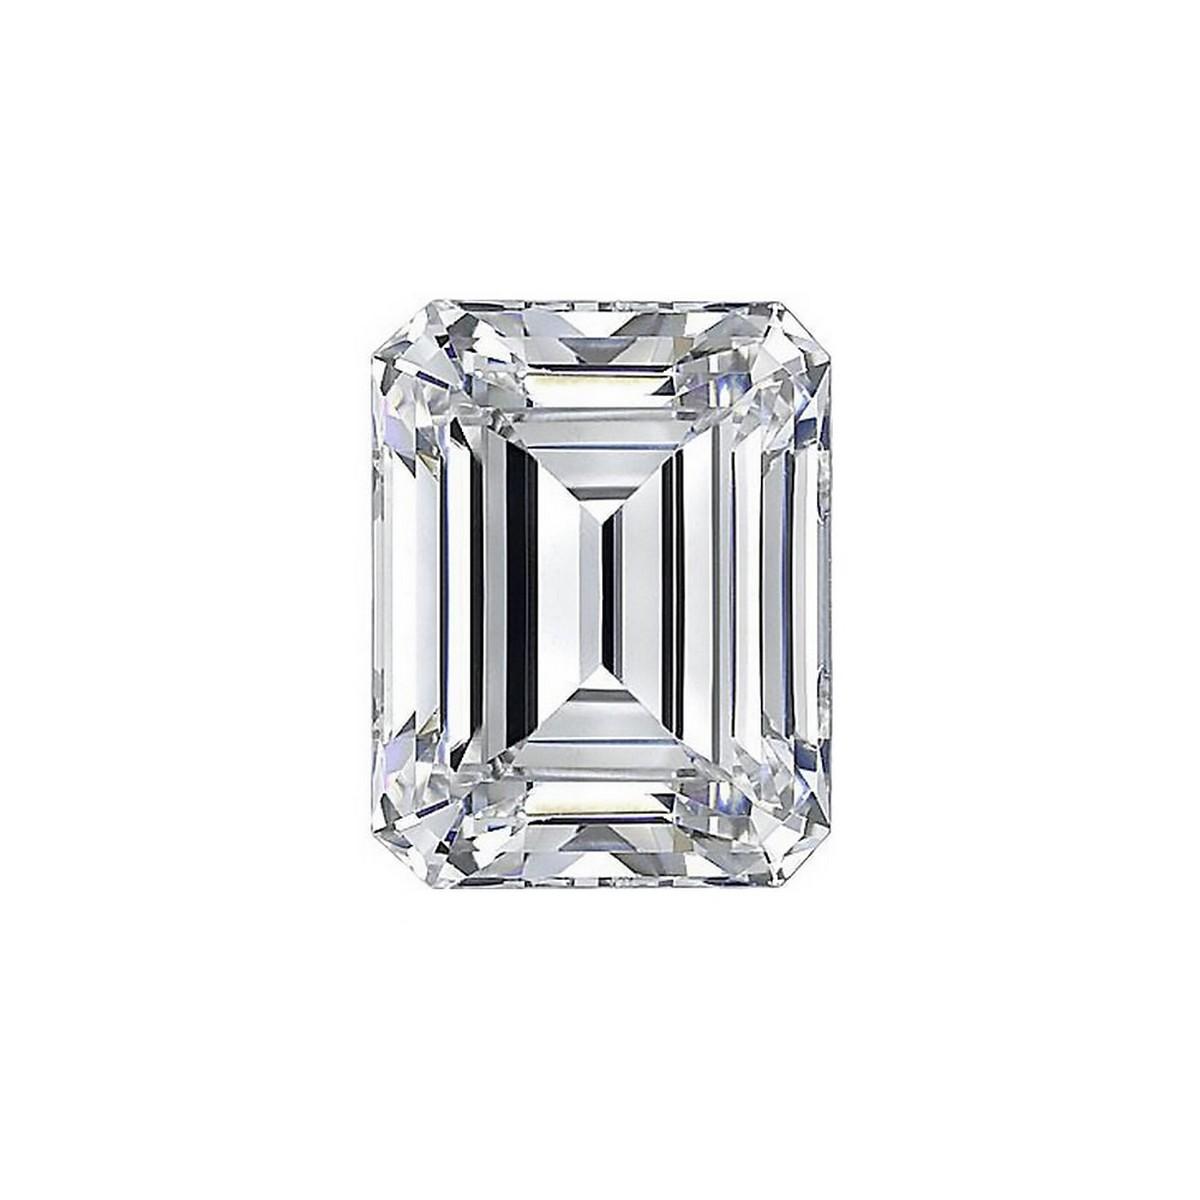 1.11 ctw. VS1 IGI Certified Emerald Cut Loose Diamond (LAB GROWN)